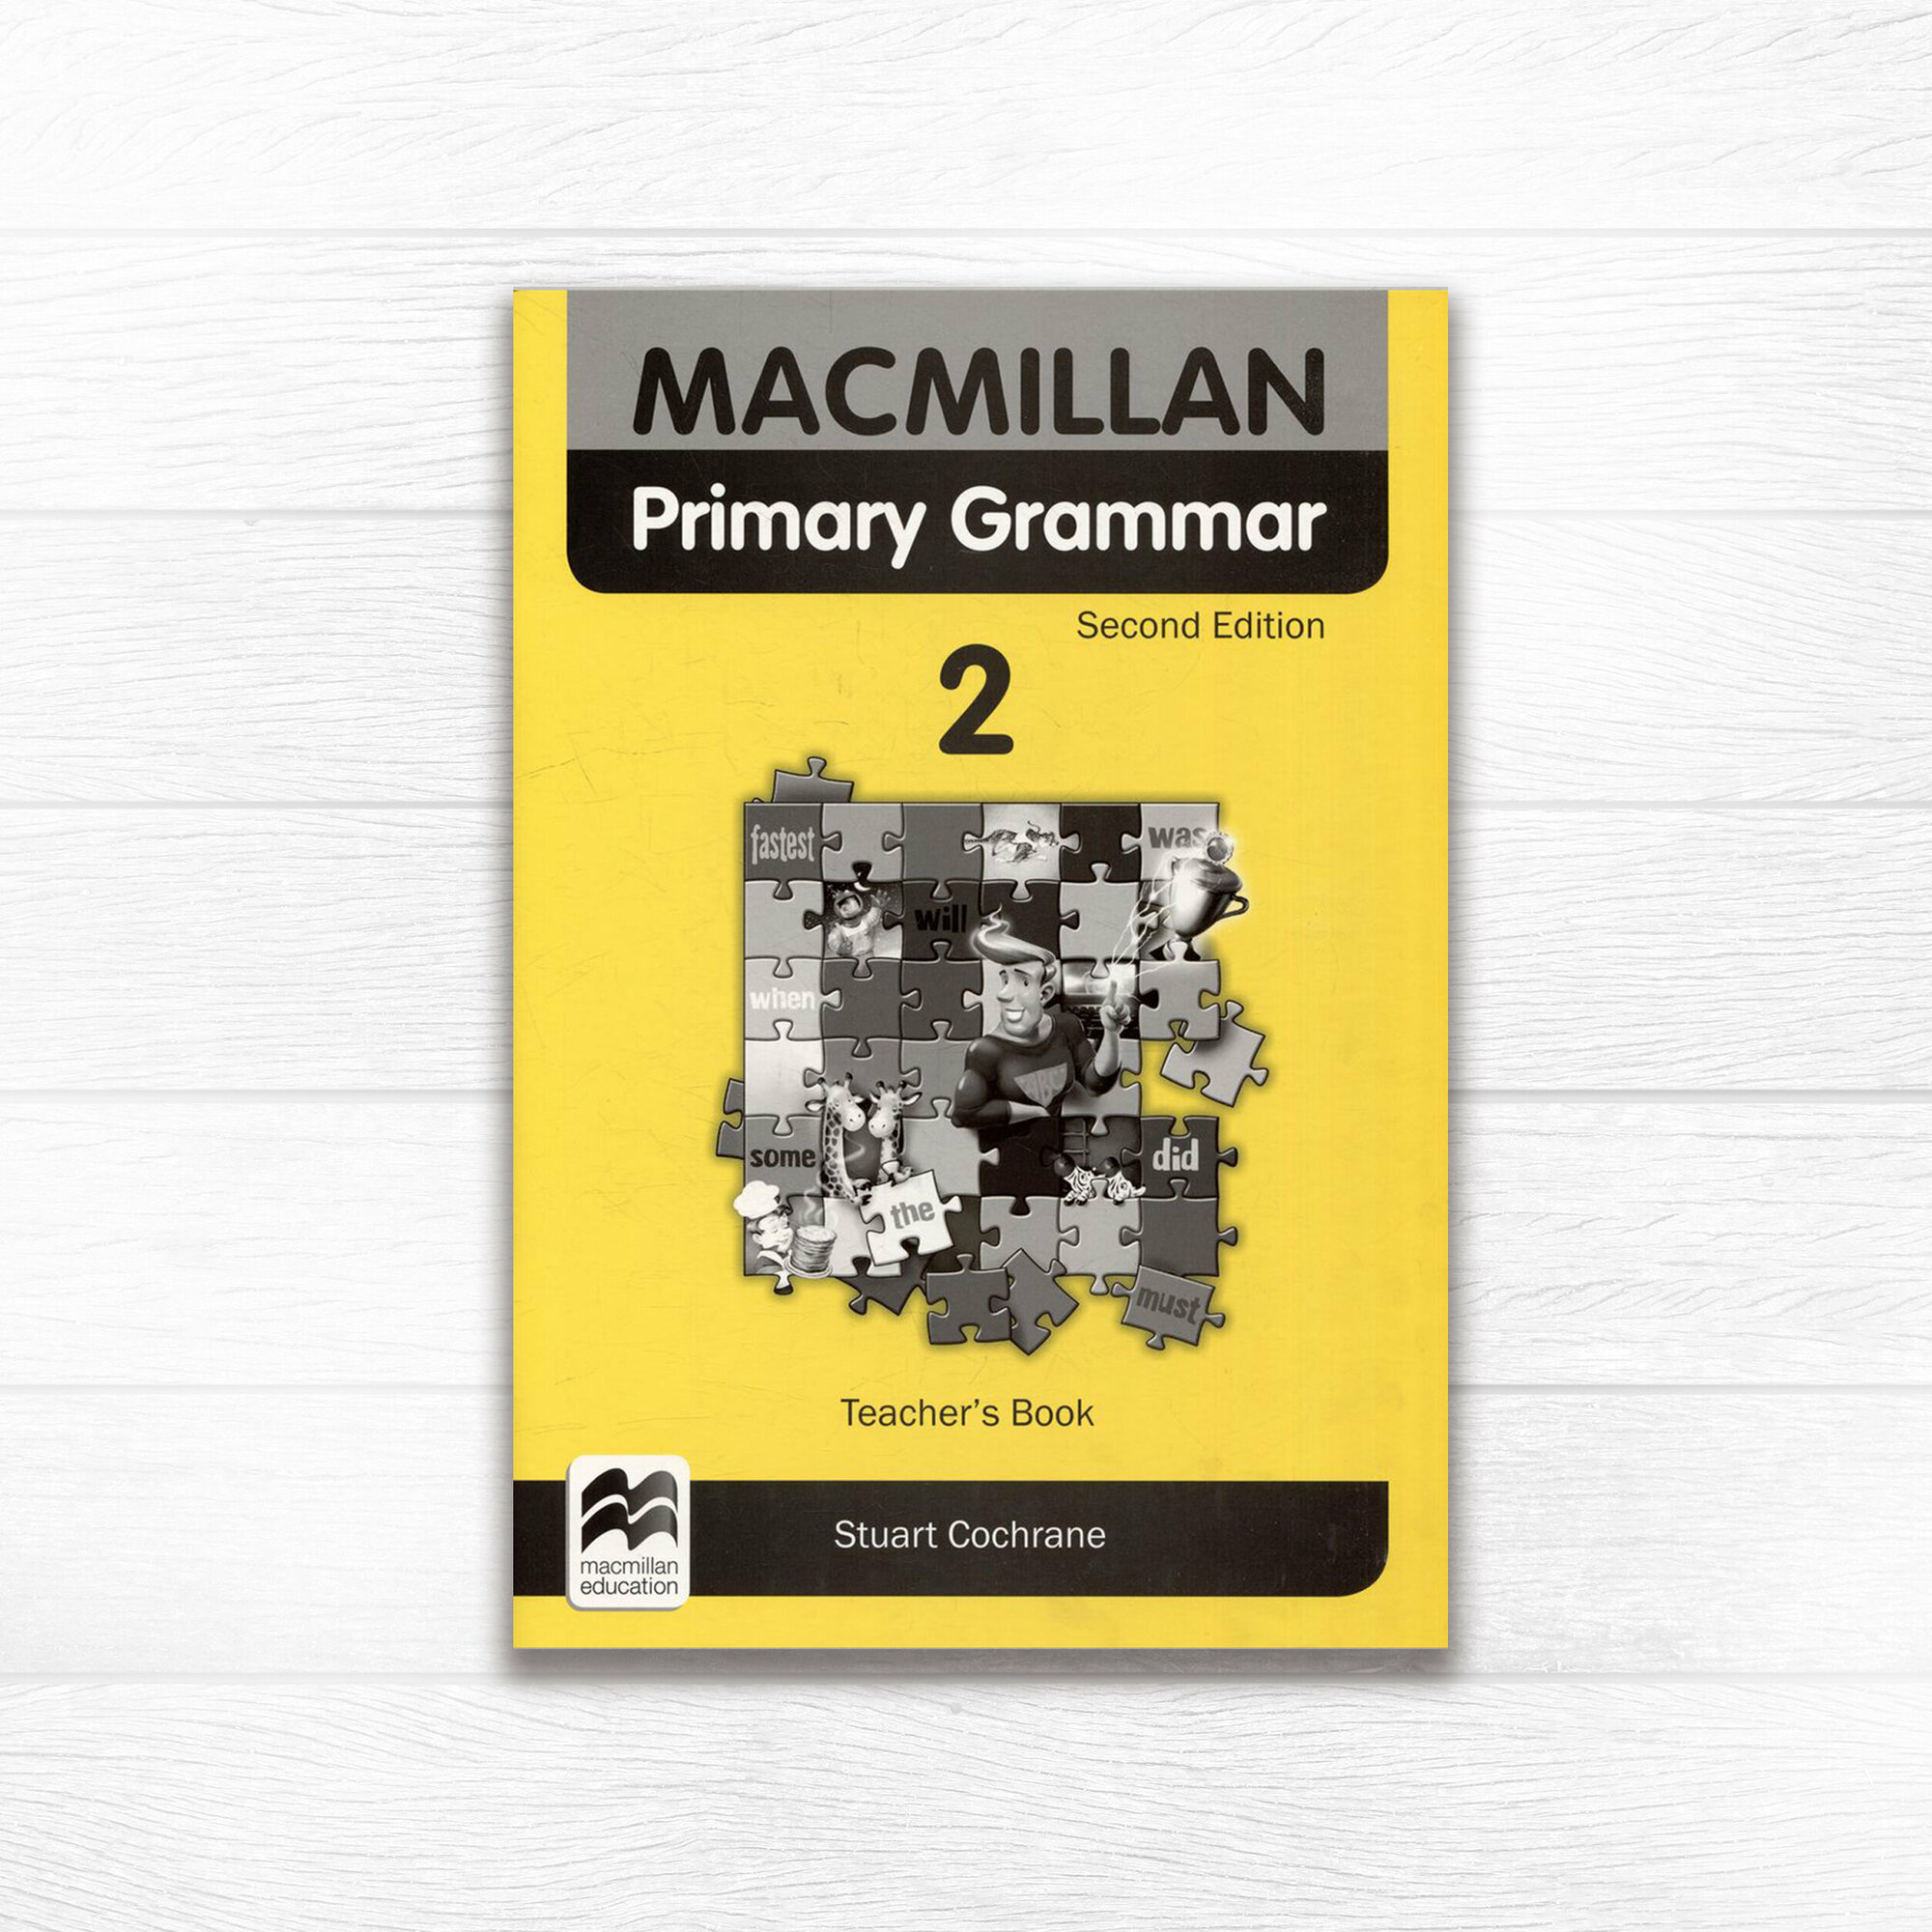 Macmillan Primary Grammar Second Edition 2 Teacher's Book pack + Webcode, книга для учителя по грамматике английского языка для детей